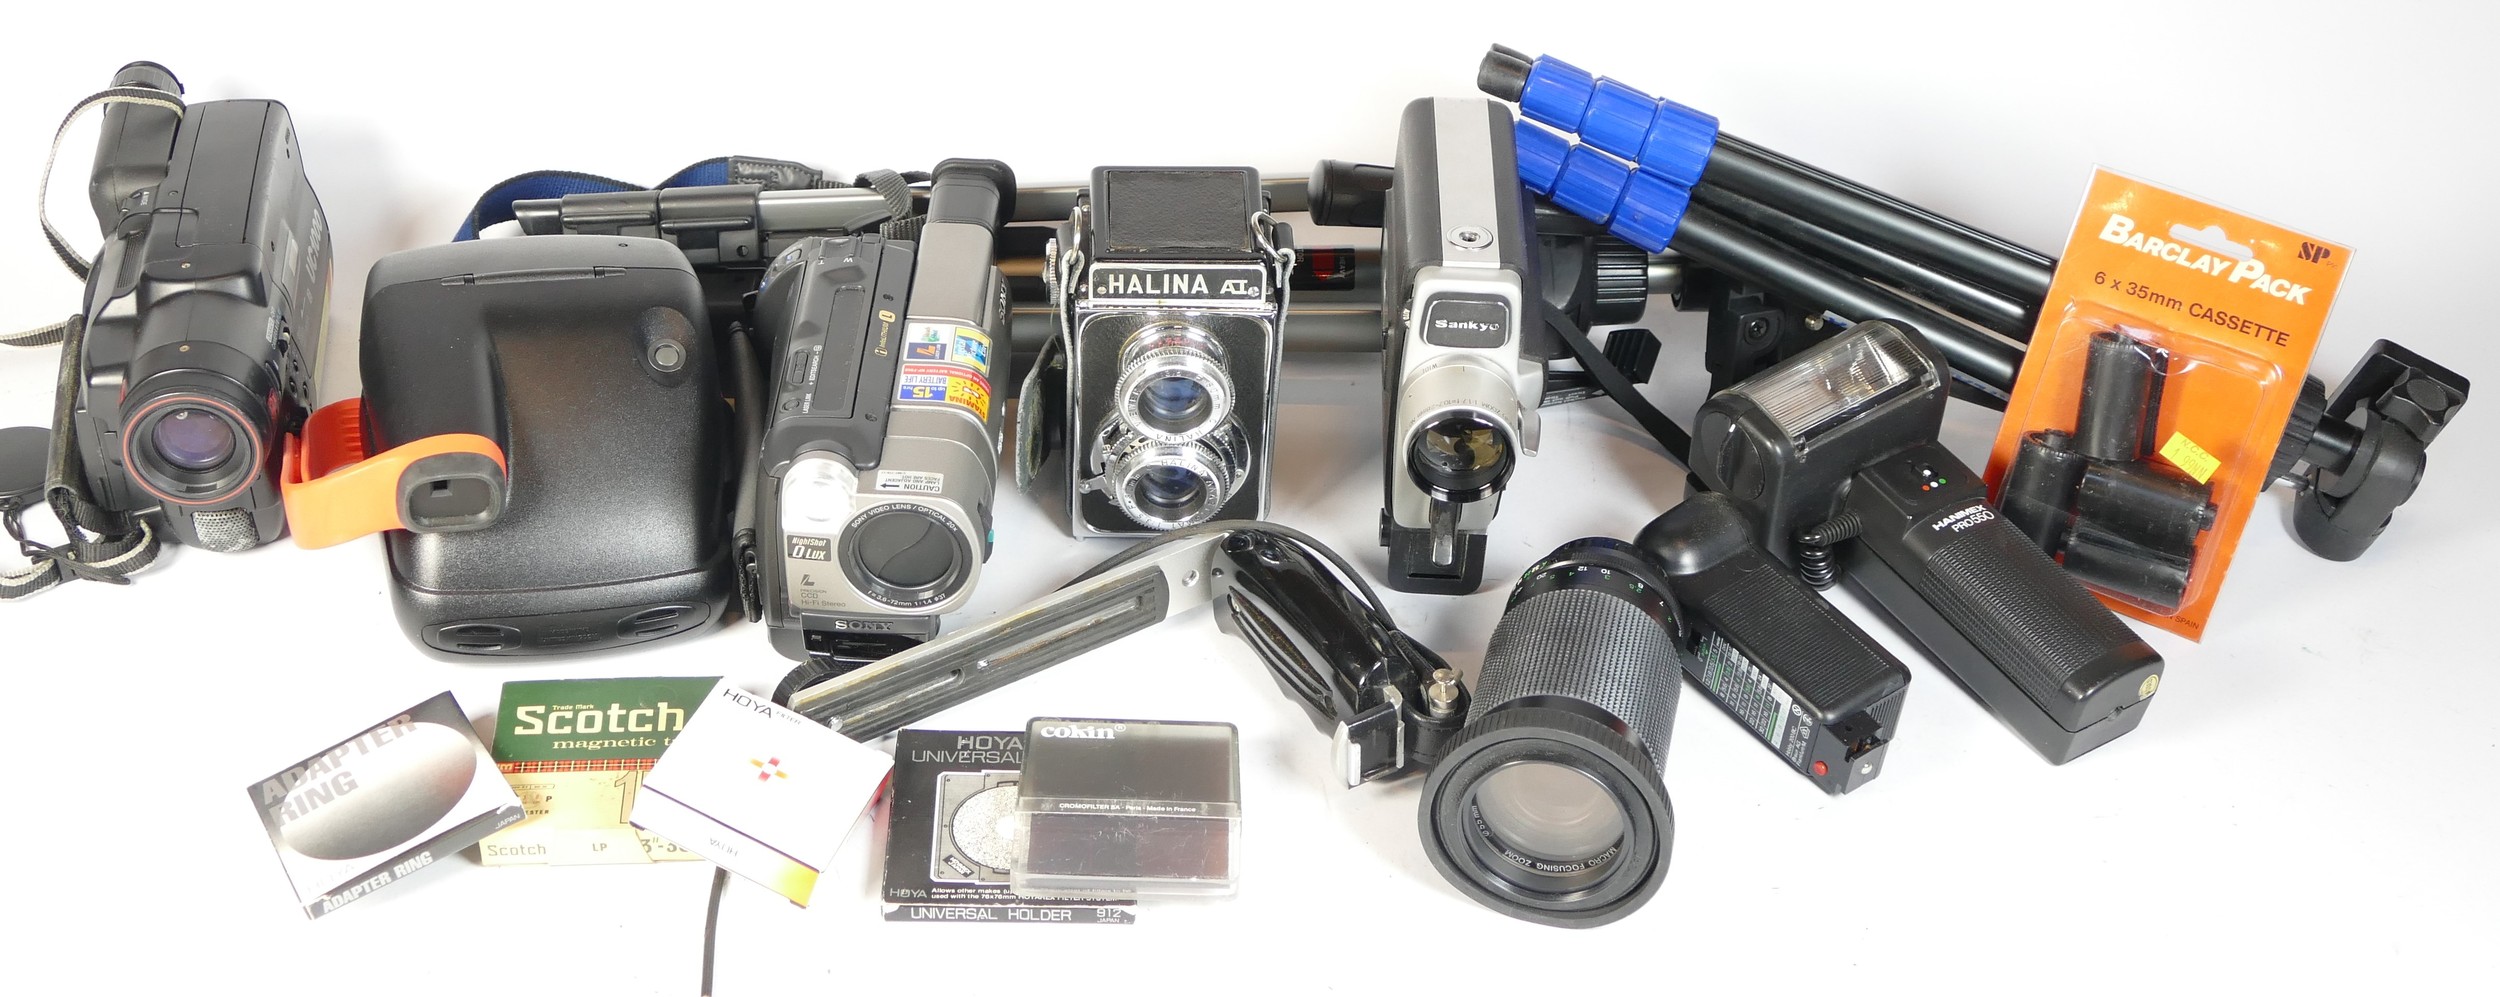 Four video camcorders to include a Canon UC1000E, a Sony CCD TR913E and a Sankyo Super Micro CM.